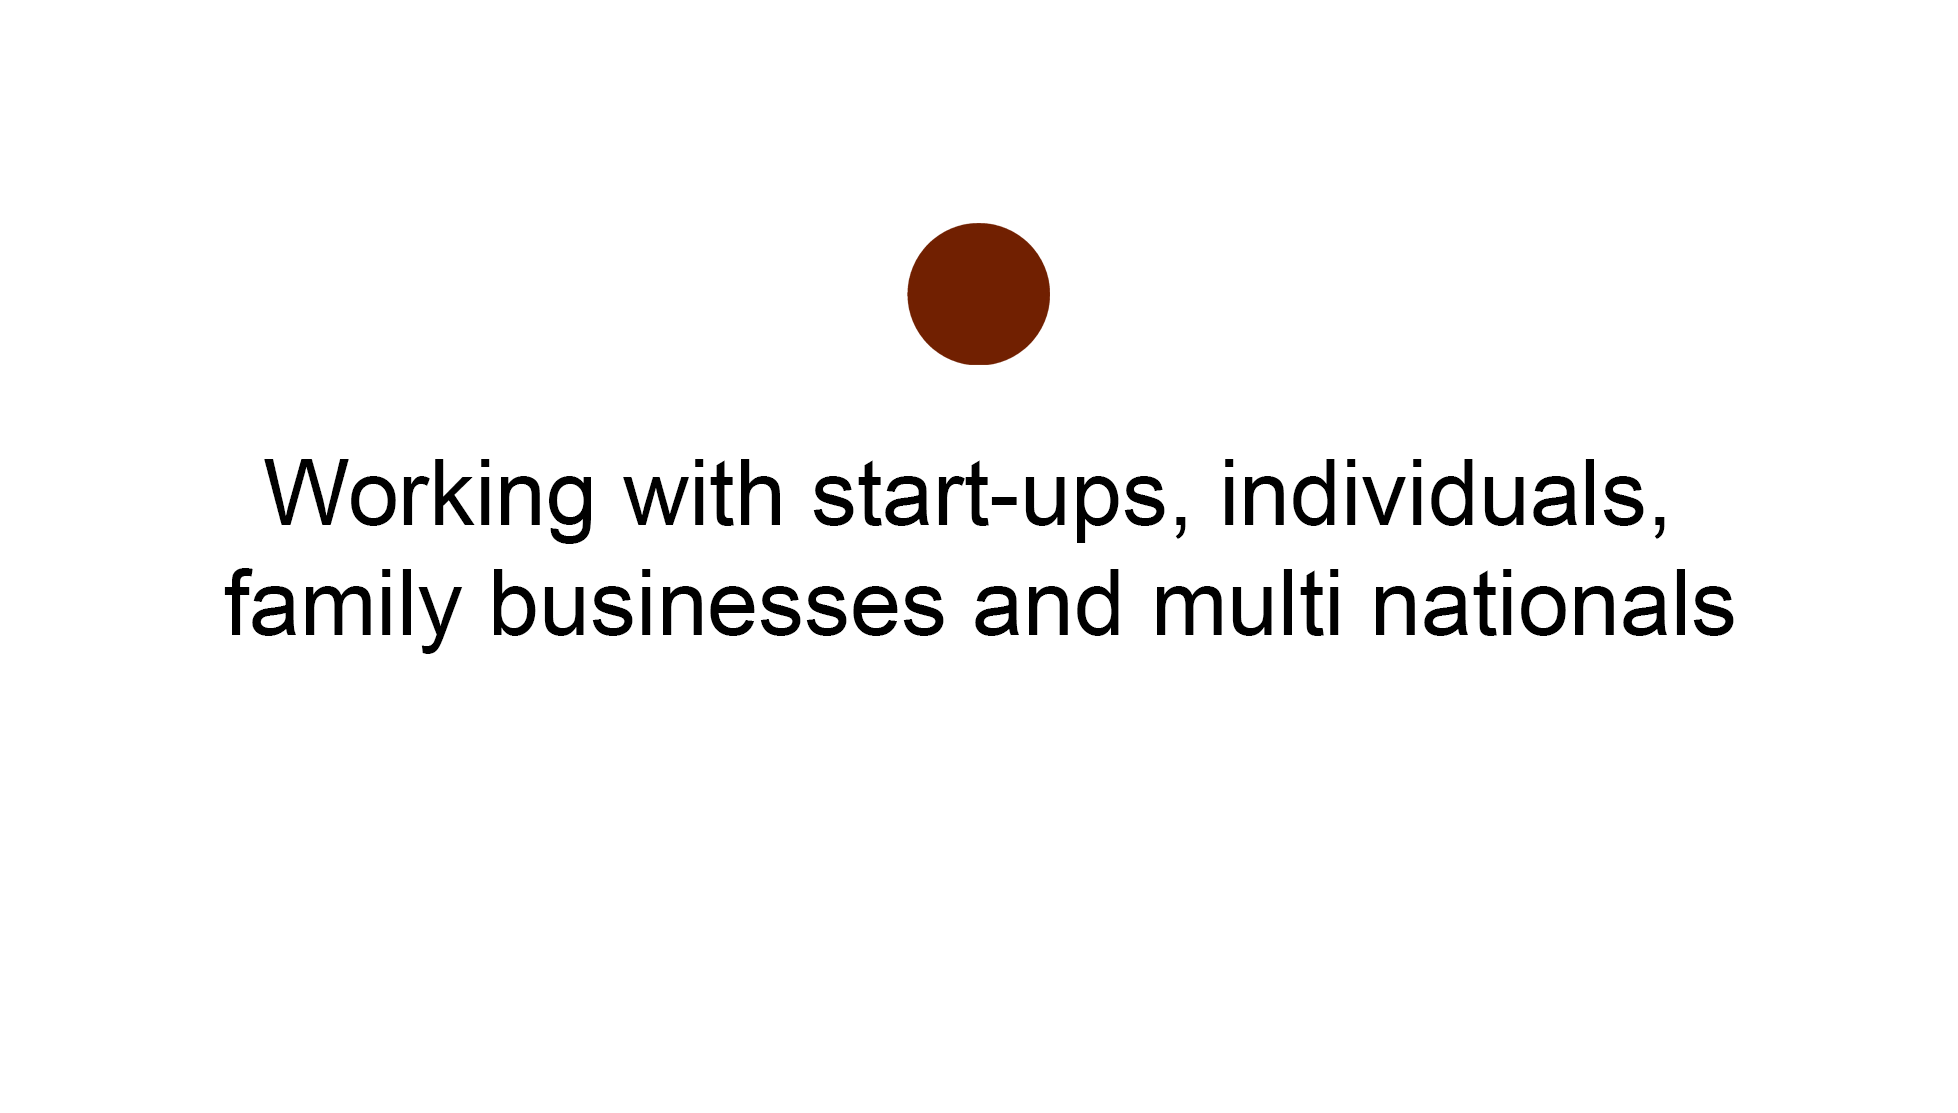 Startups-individuals-businesses